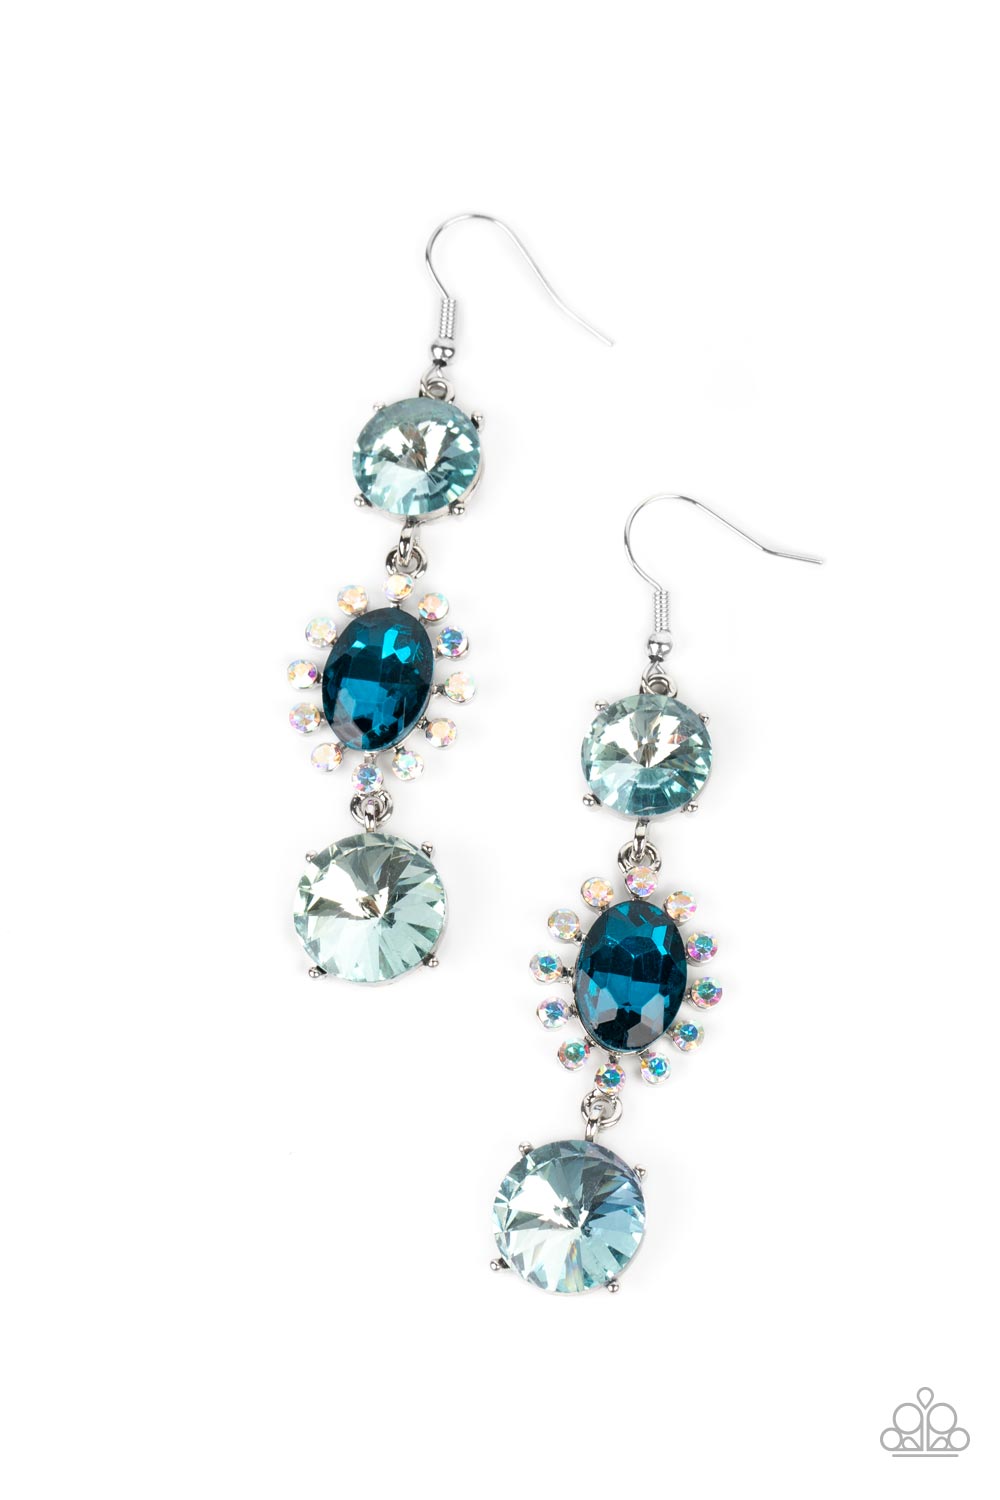 Magical Melodrama Blue Iridescent Rhinestone Earrings - Paparazzi Accessories- lightbox - CarasShop.com - $5 Jewelry by Cara Jewels